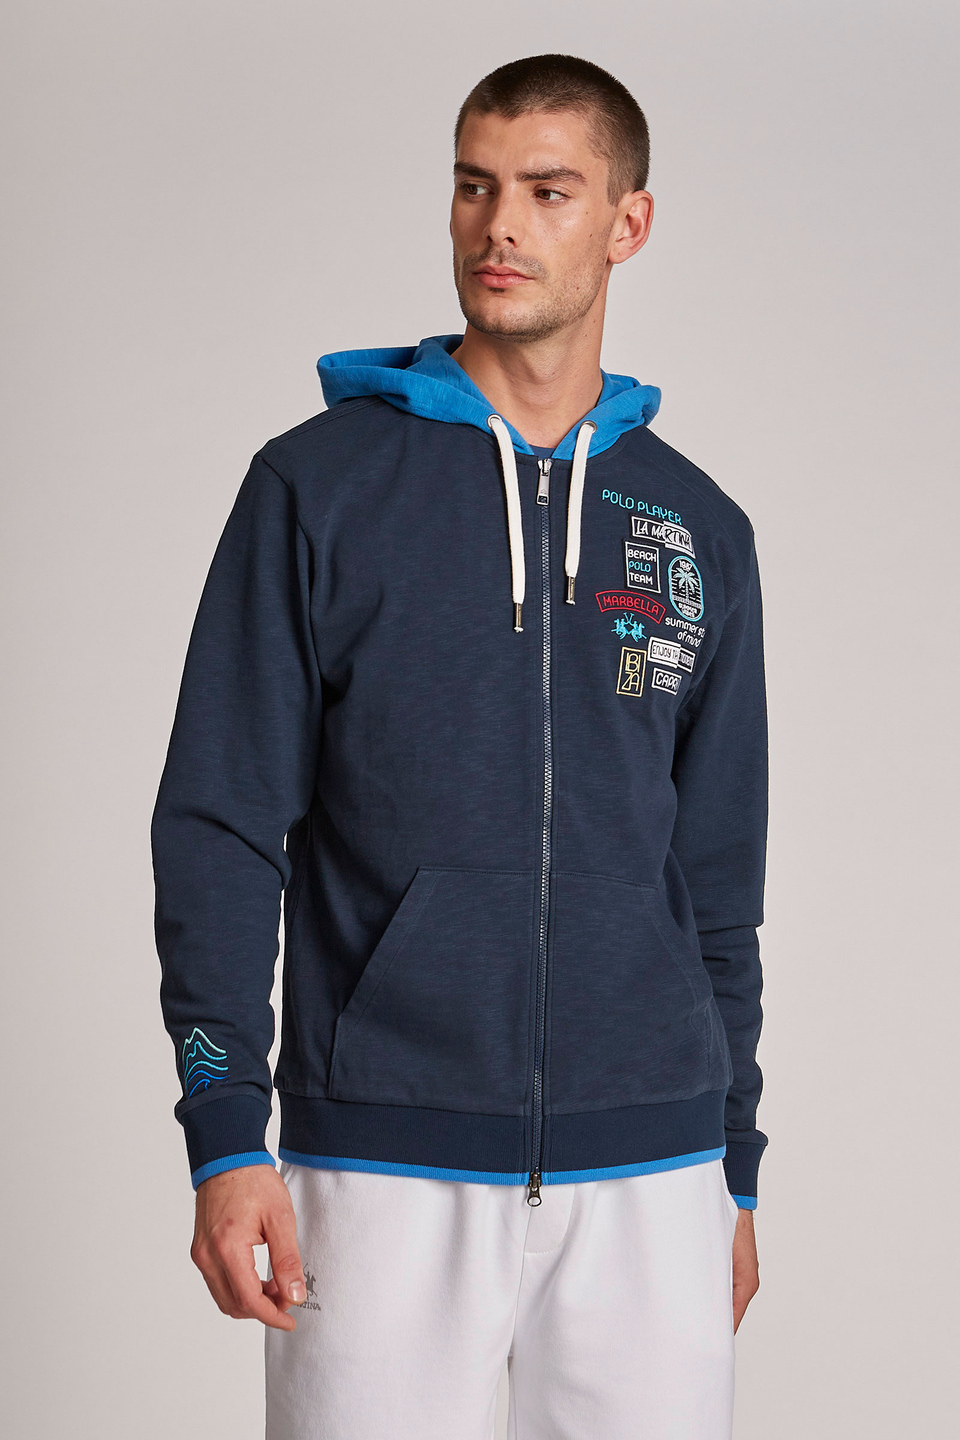 Men's regular-fit hoodie in 100% cotton fabric | La Martina - Official Online Shop